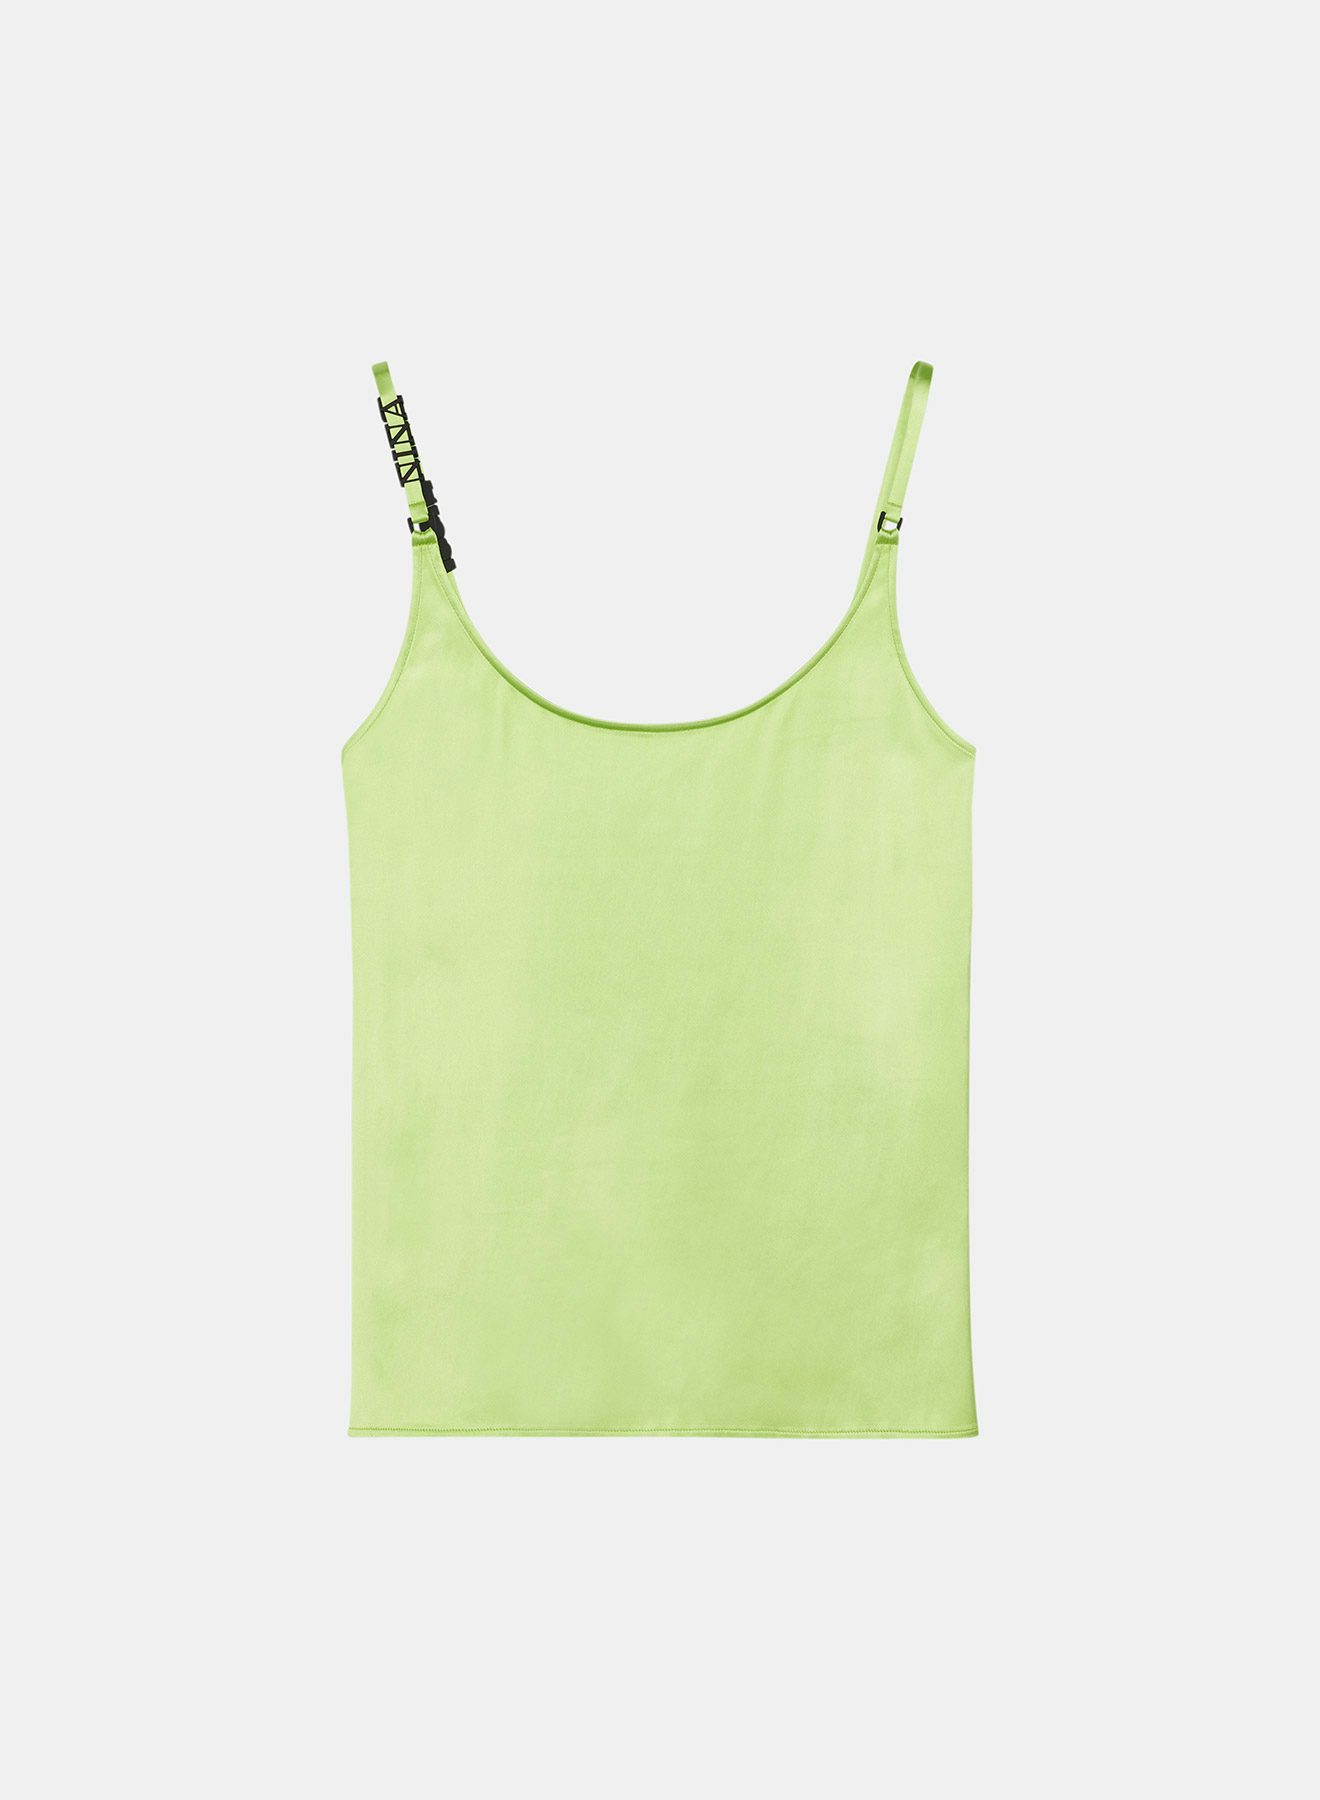 Green satin camisole zipped in the back with Nina Ricci logo on the shoulder strap - Nina Ricci